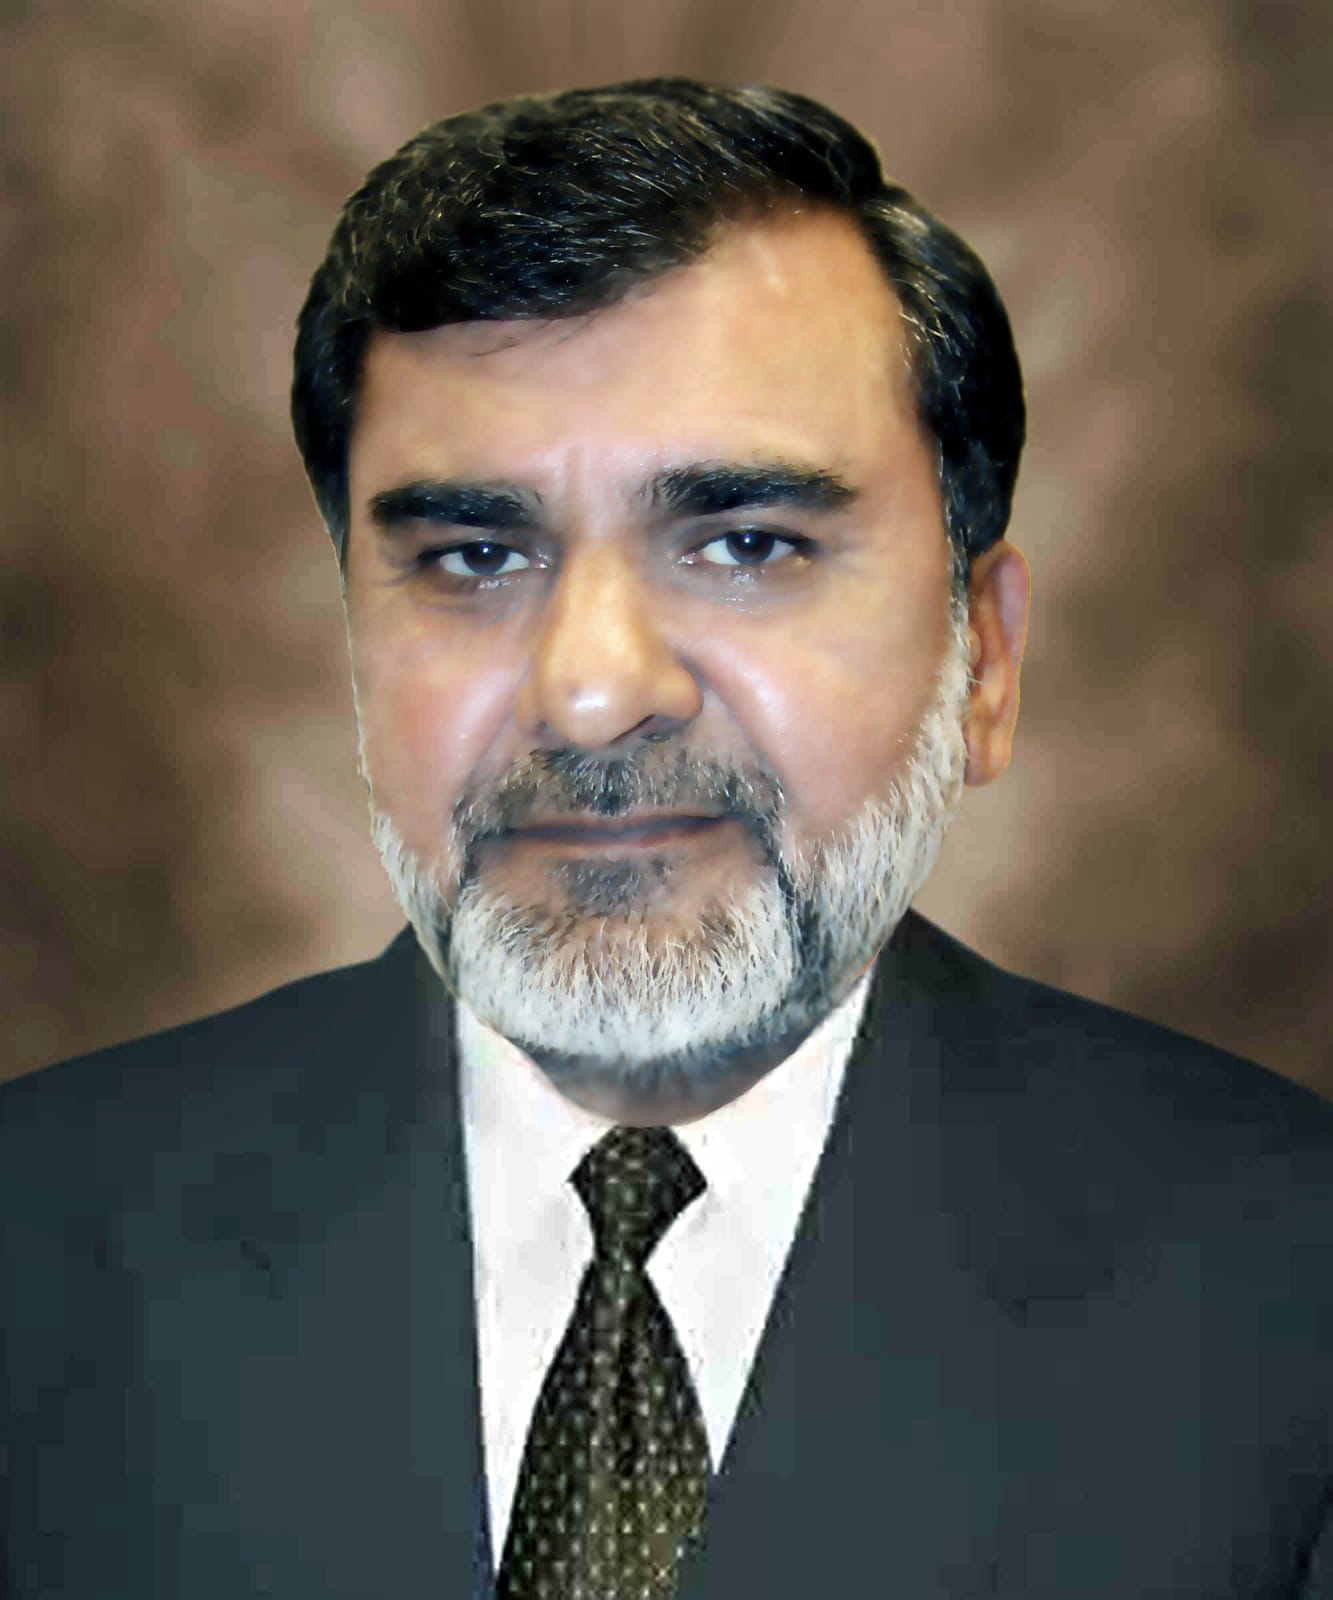 Mr. Faizullah Khan